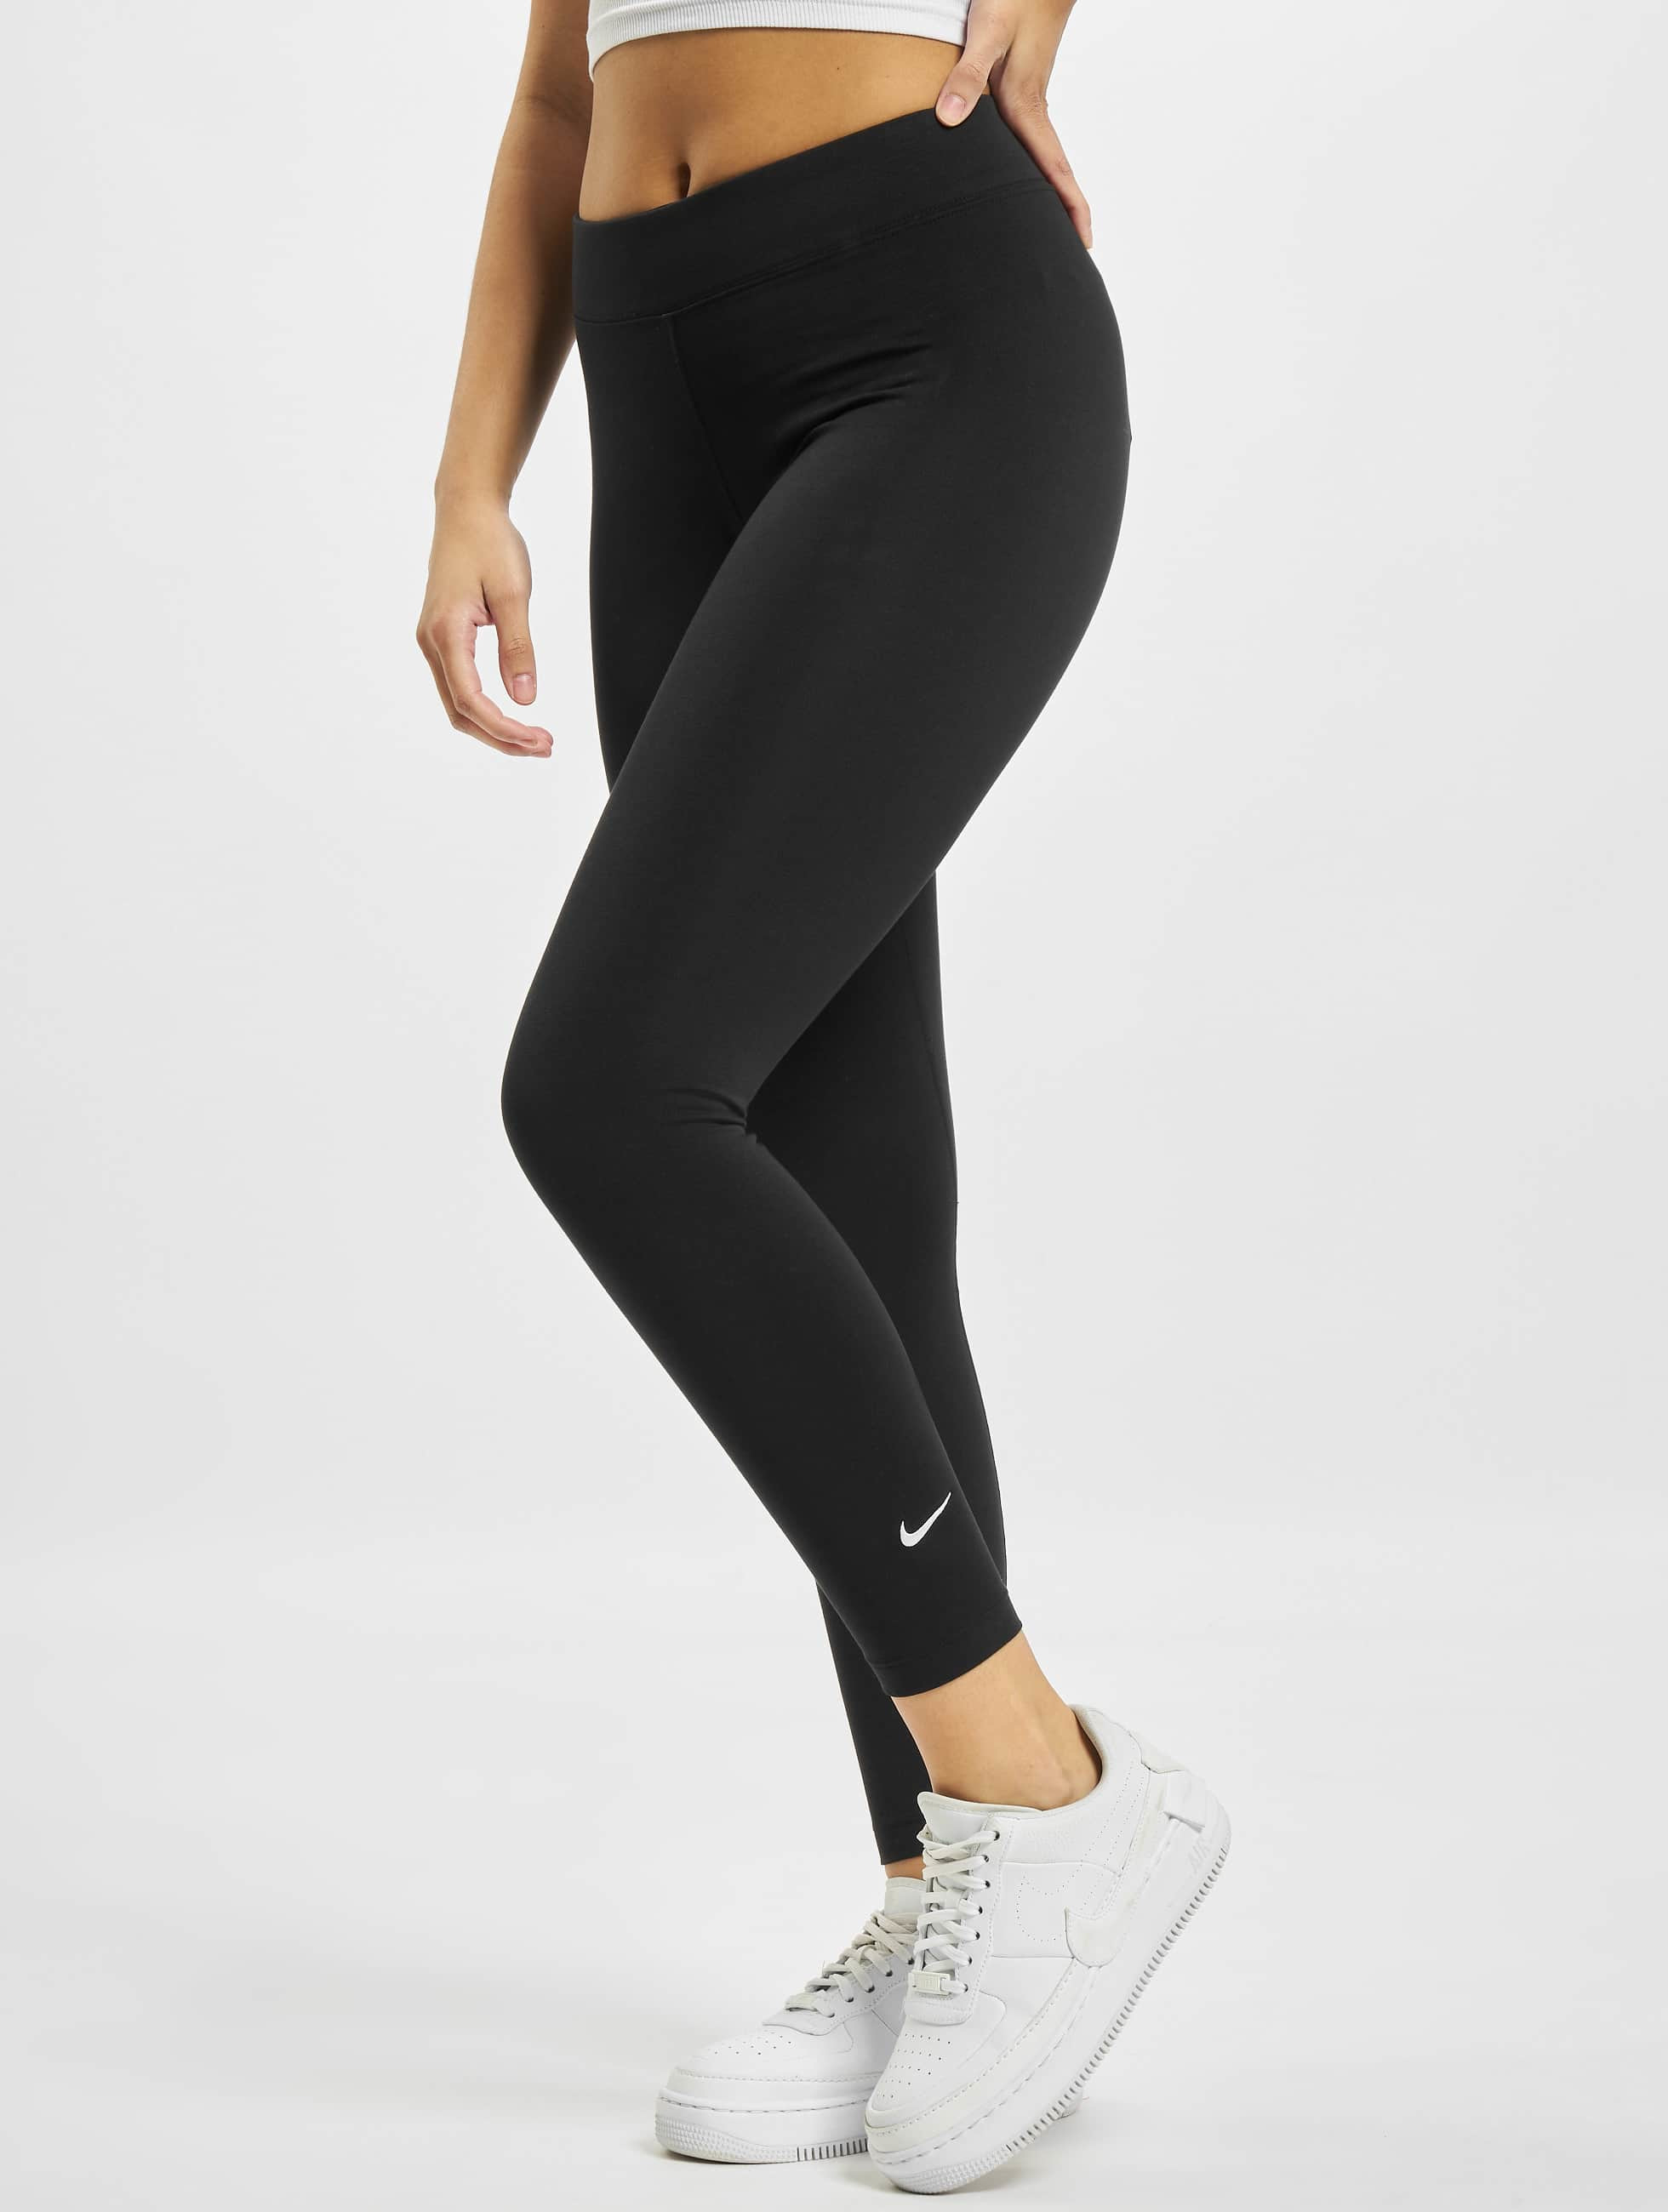 Nike Women's Nike Sportswear Essential Leggings Black/White